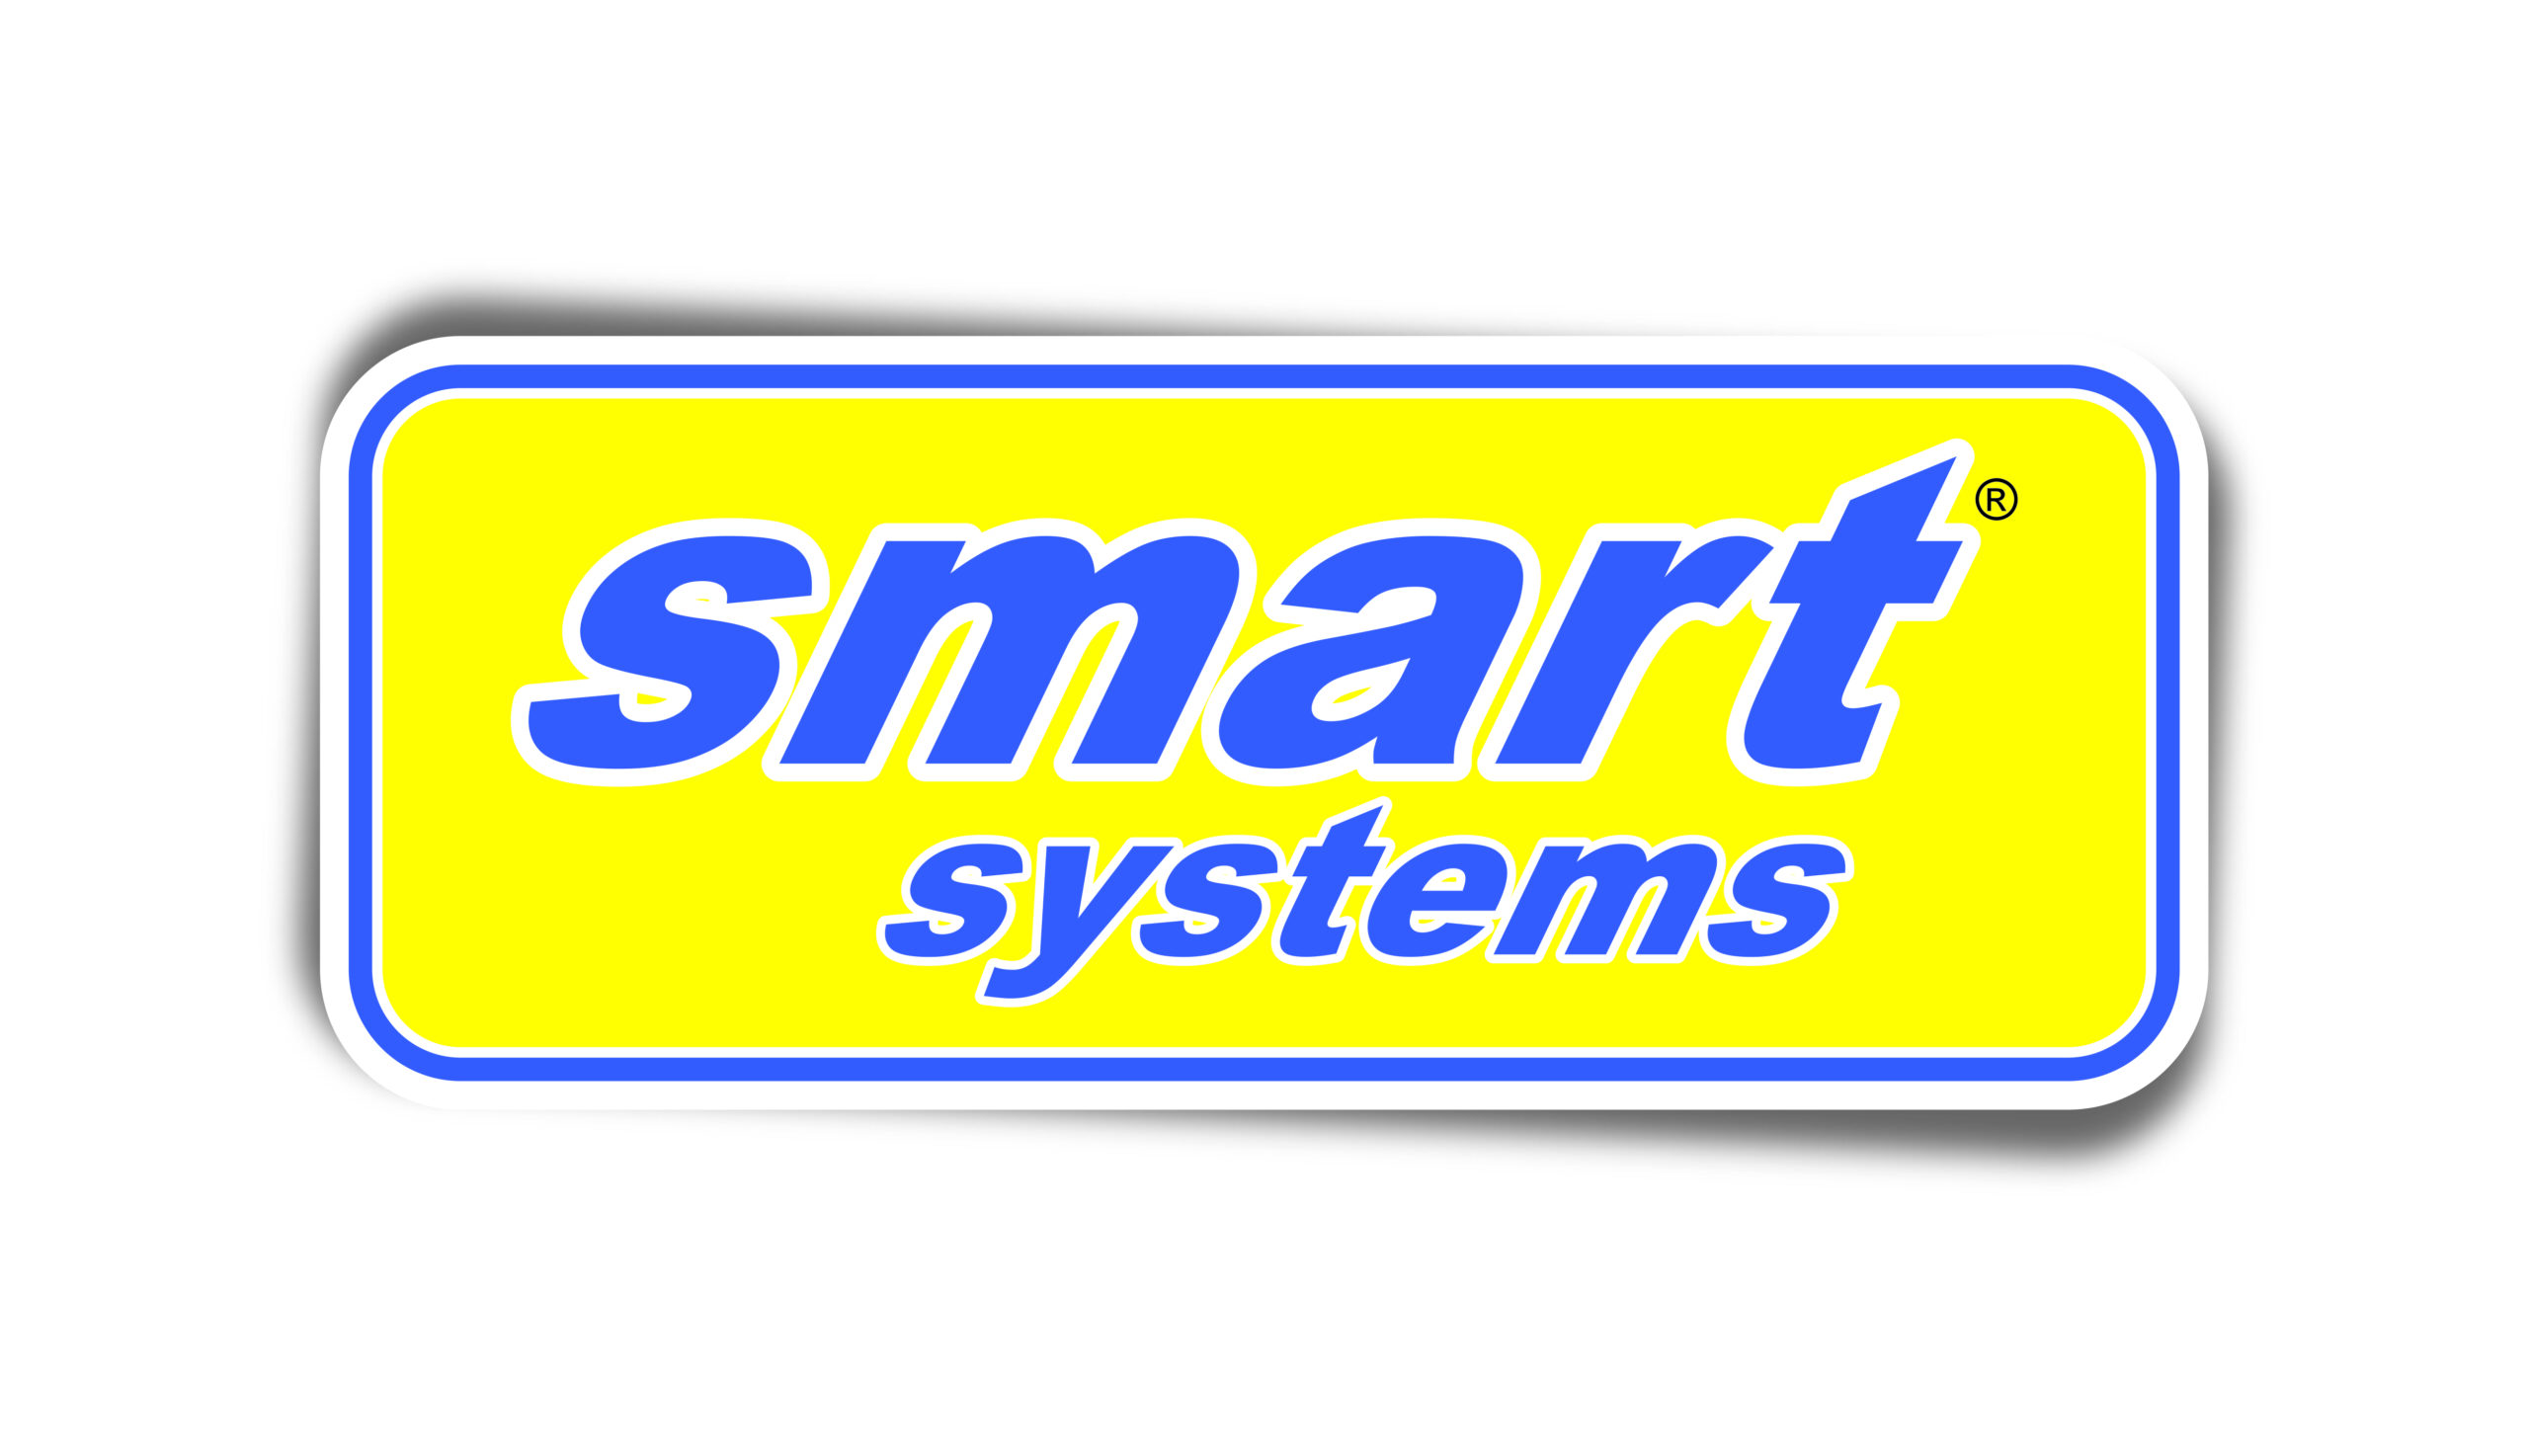 Smart Systems Logo